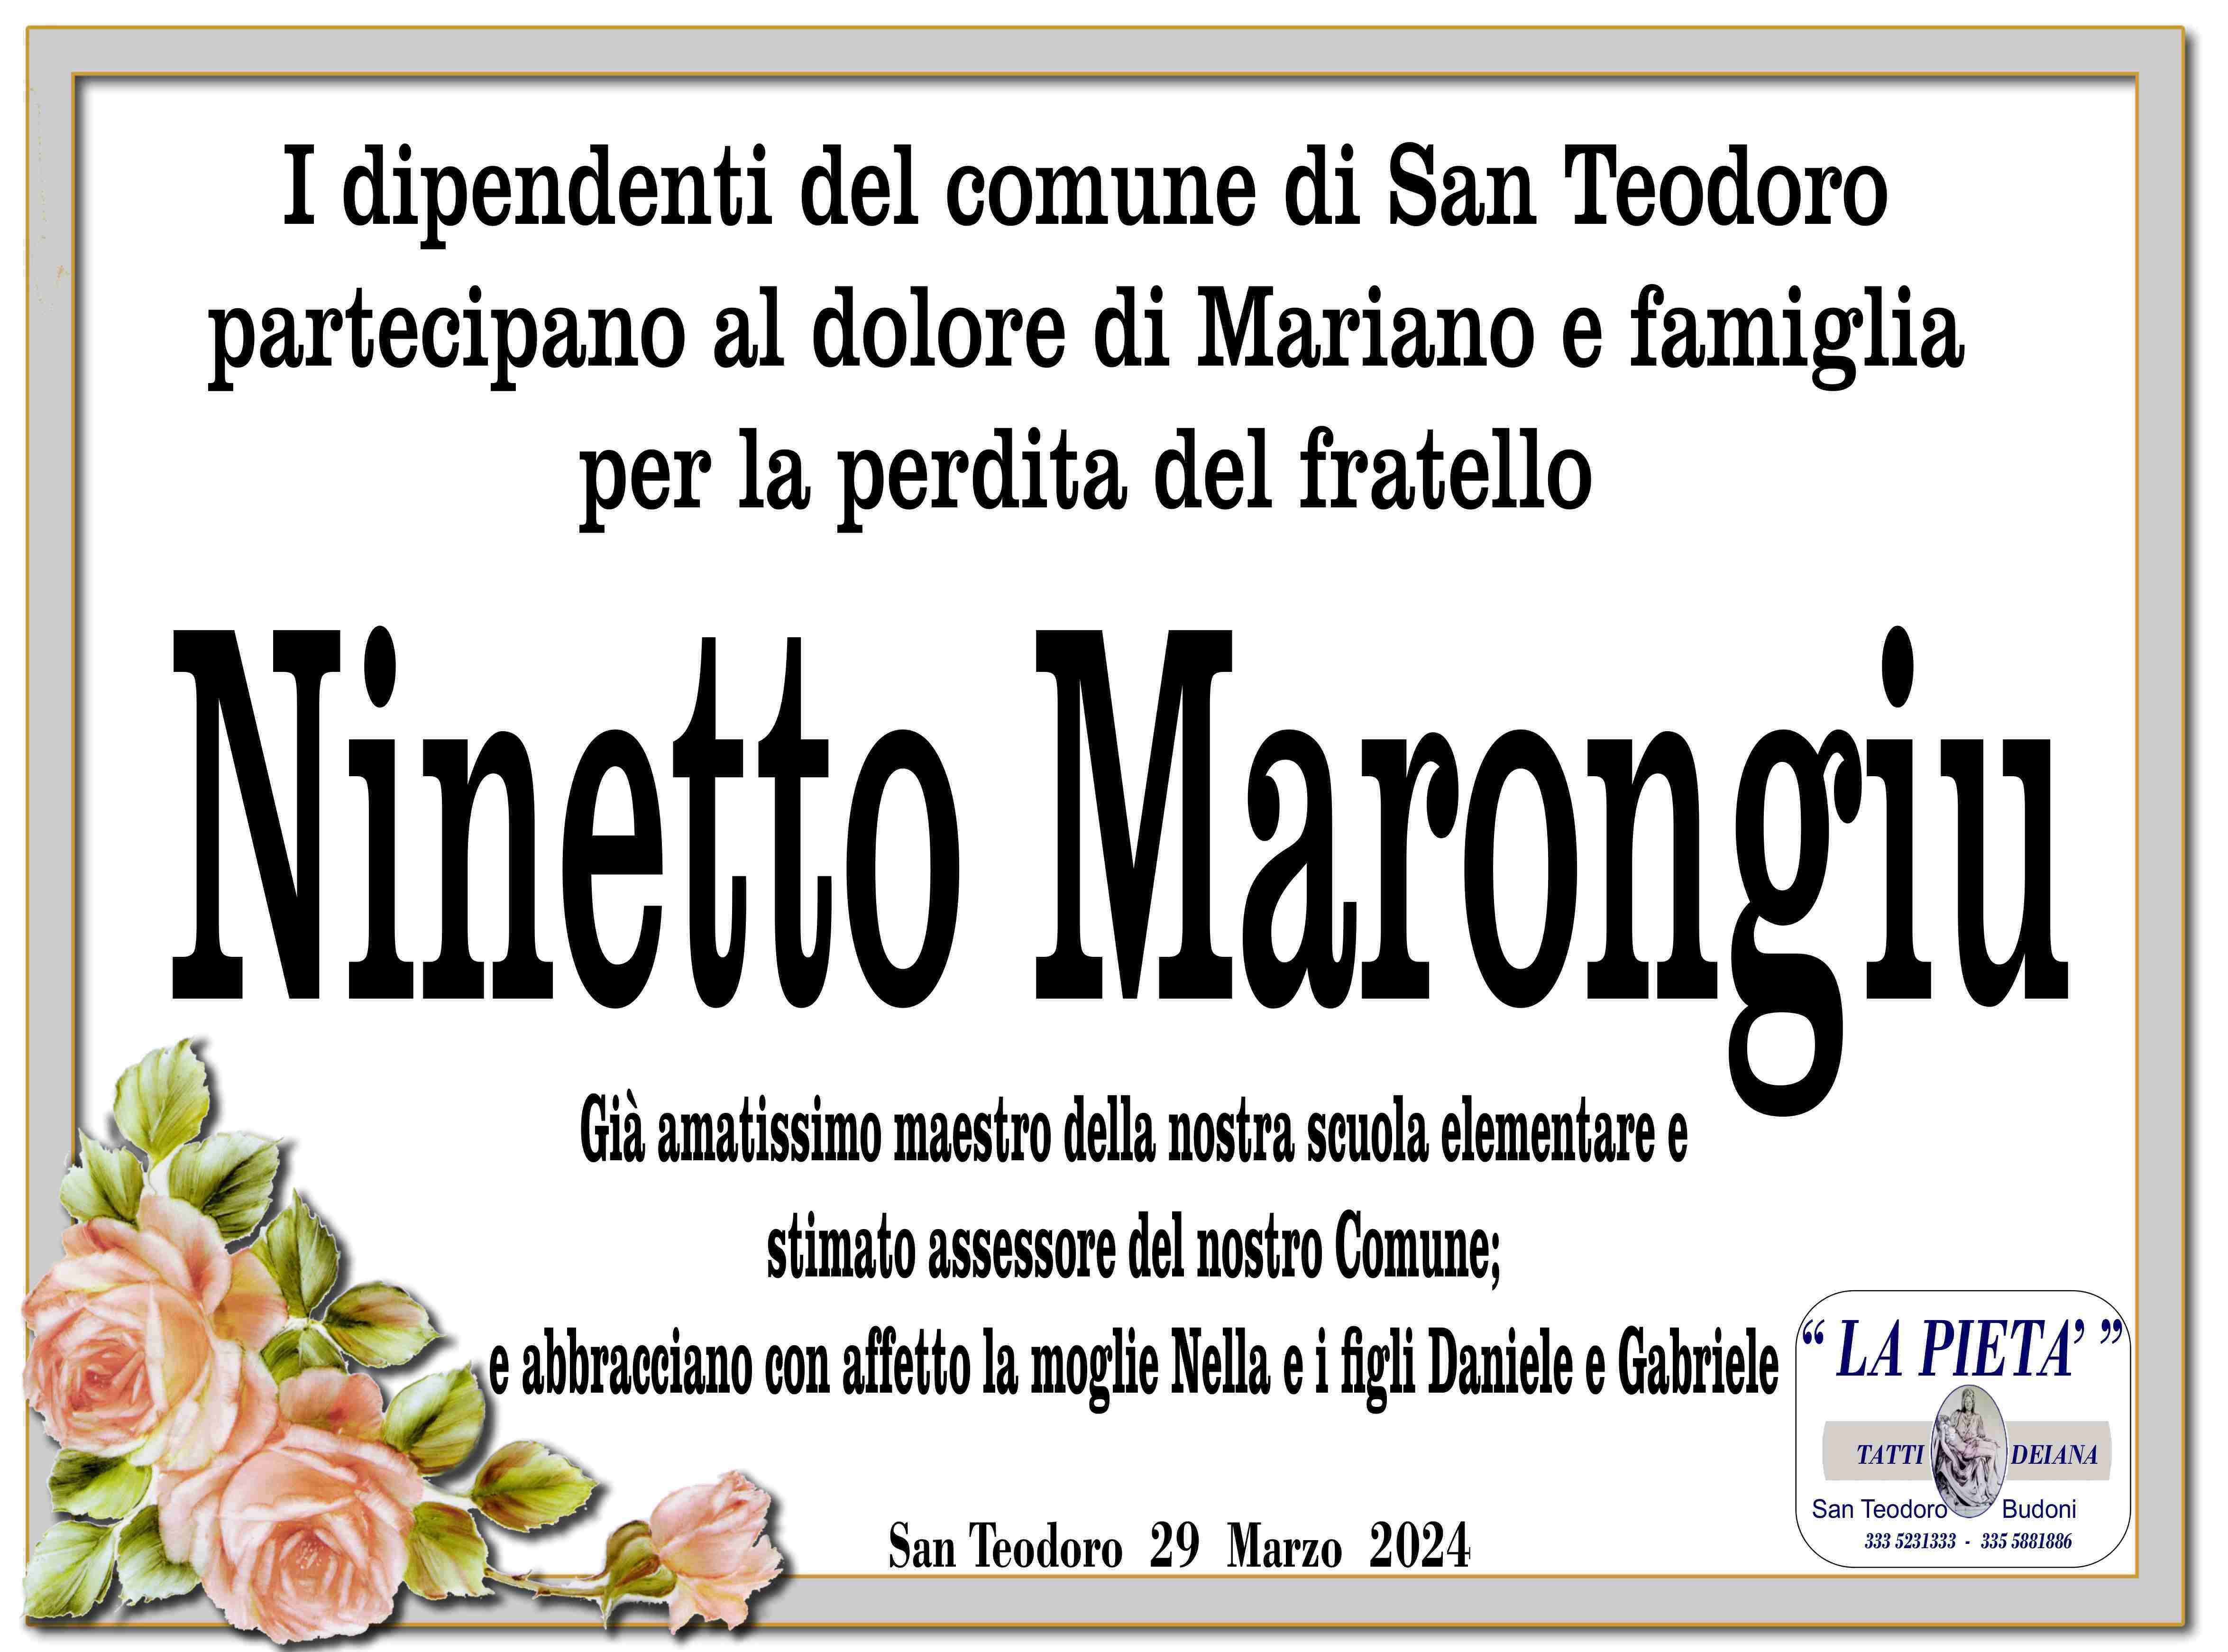 Ninetto Marongiu